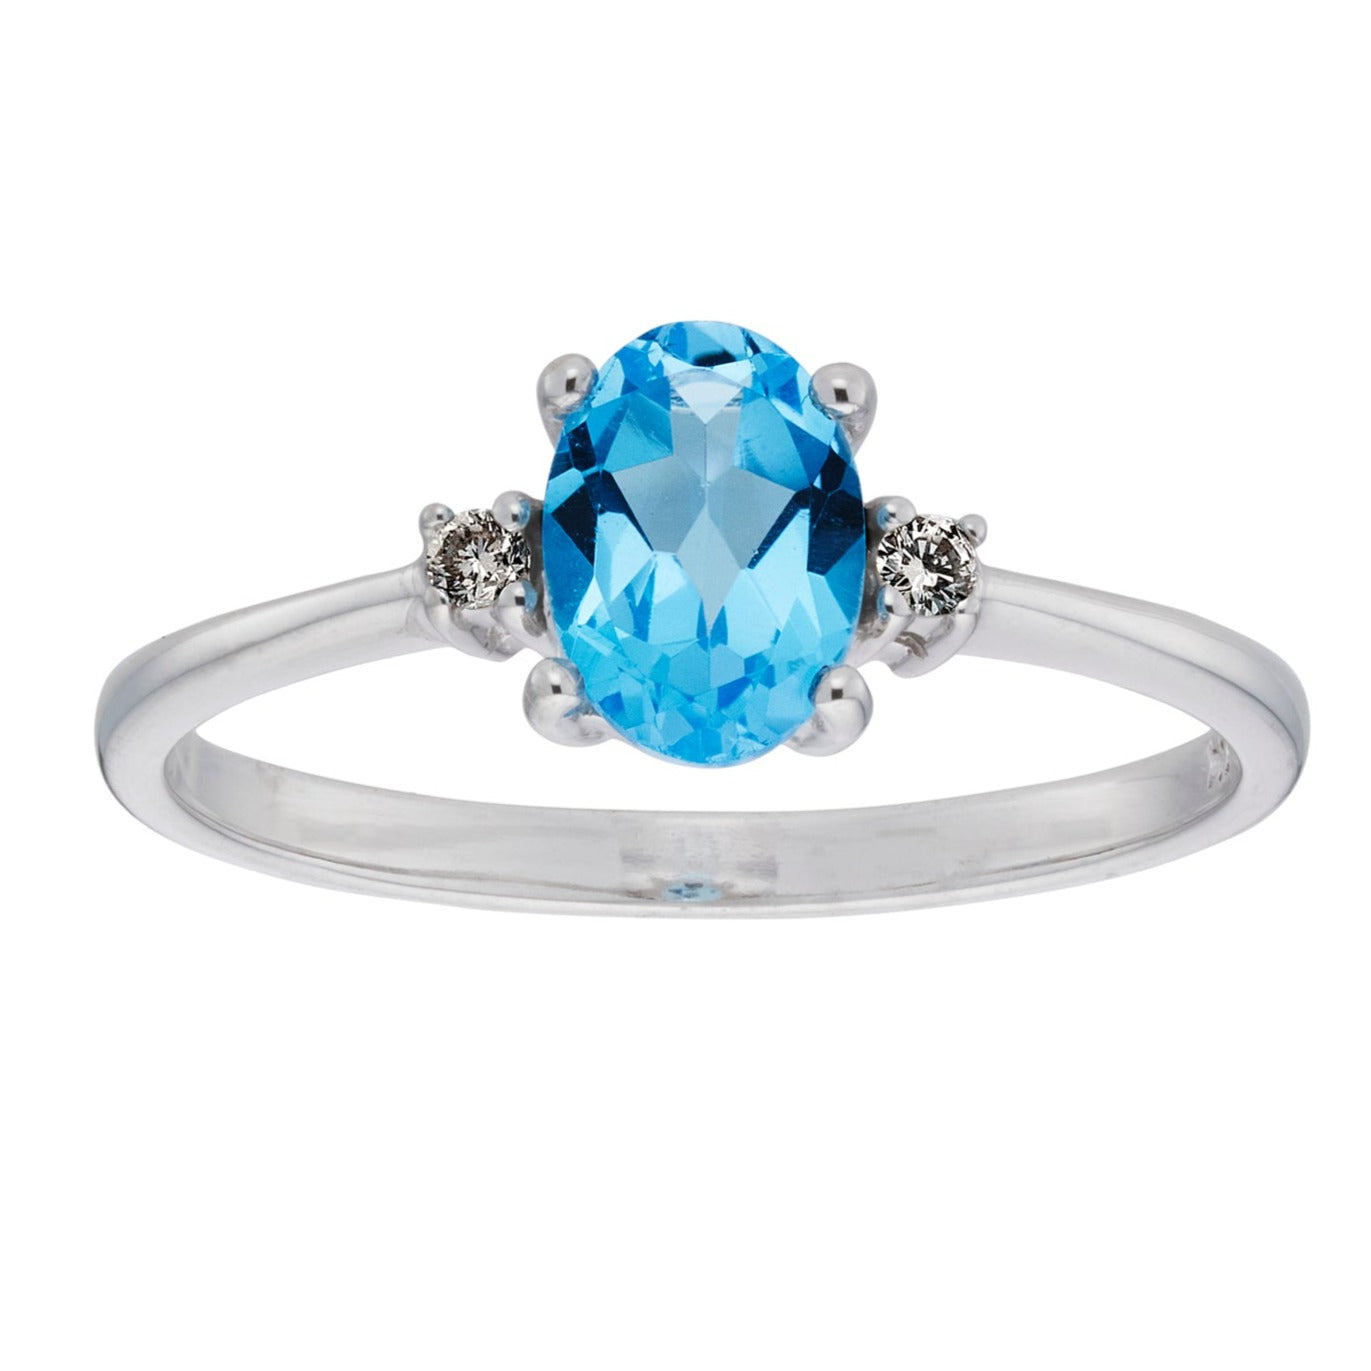 9ct white gold 7x5mm oval blue topaz & diamond ring 0.03ct